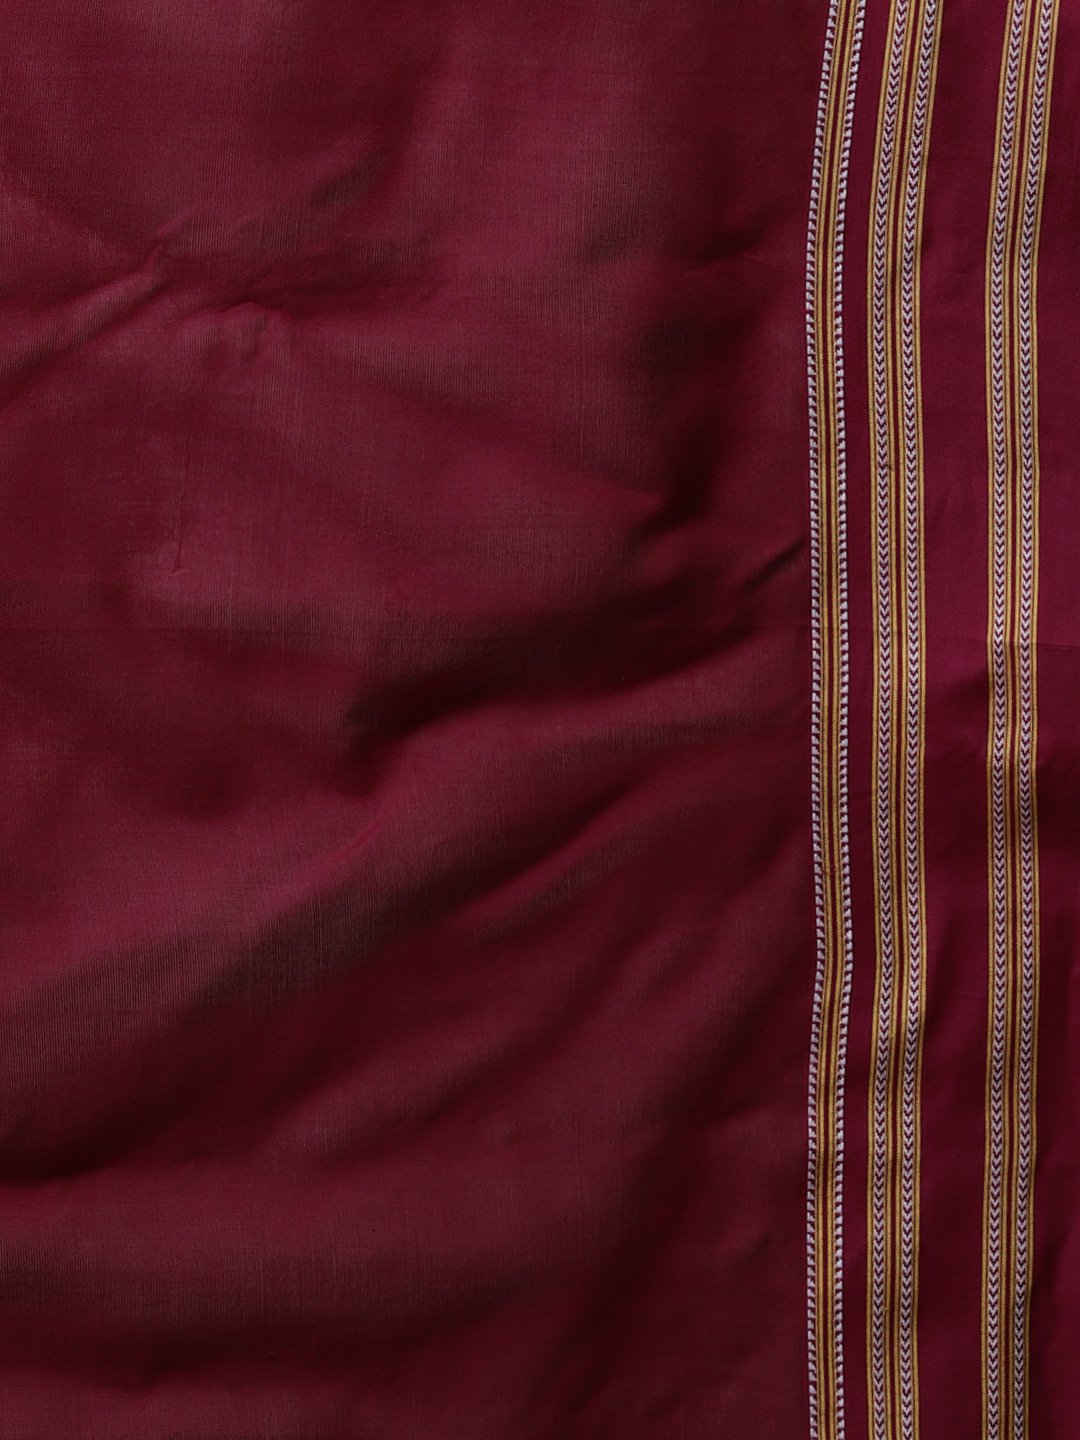 Olive ilkal handloom cotton saree